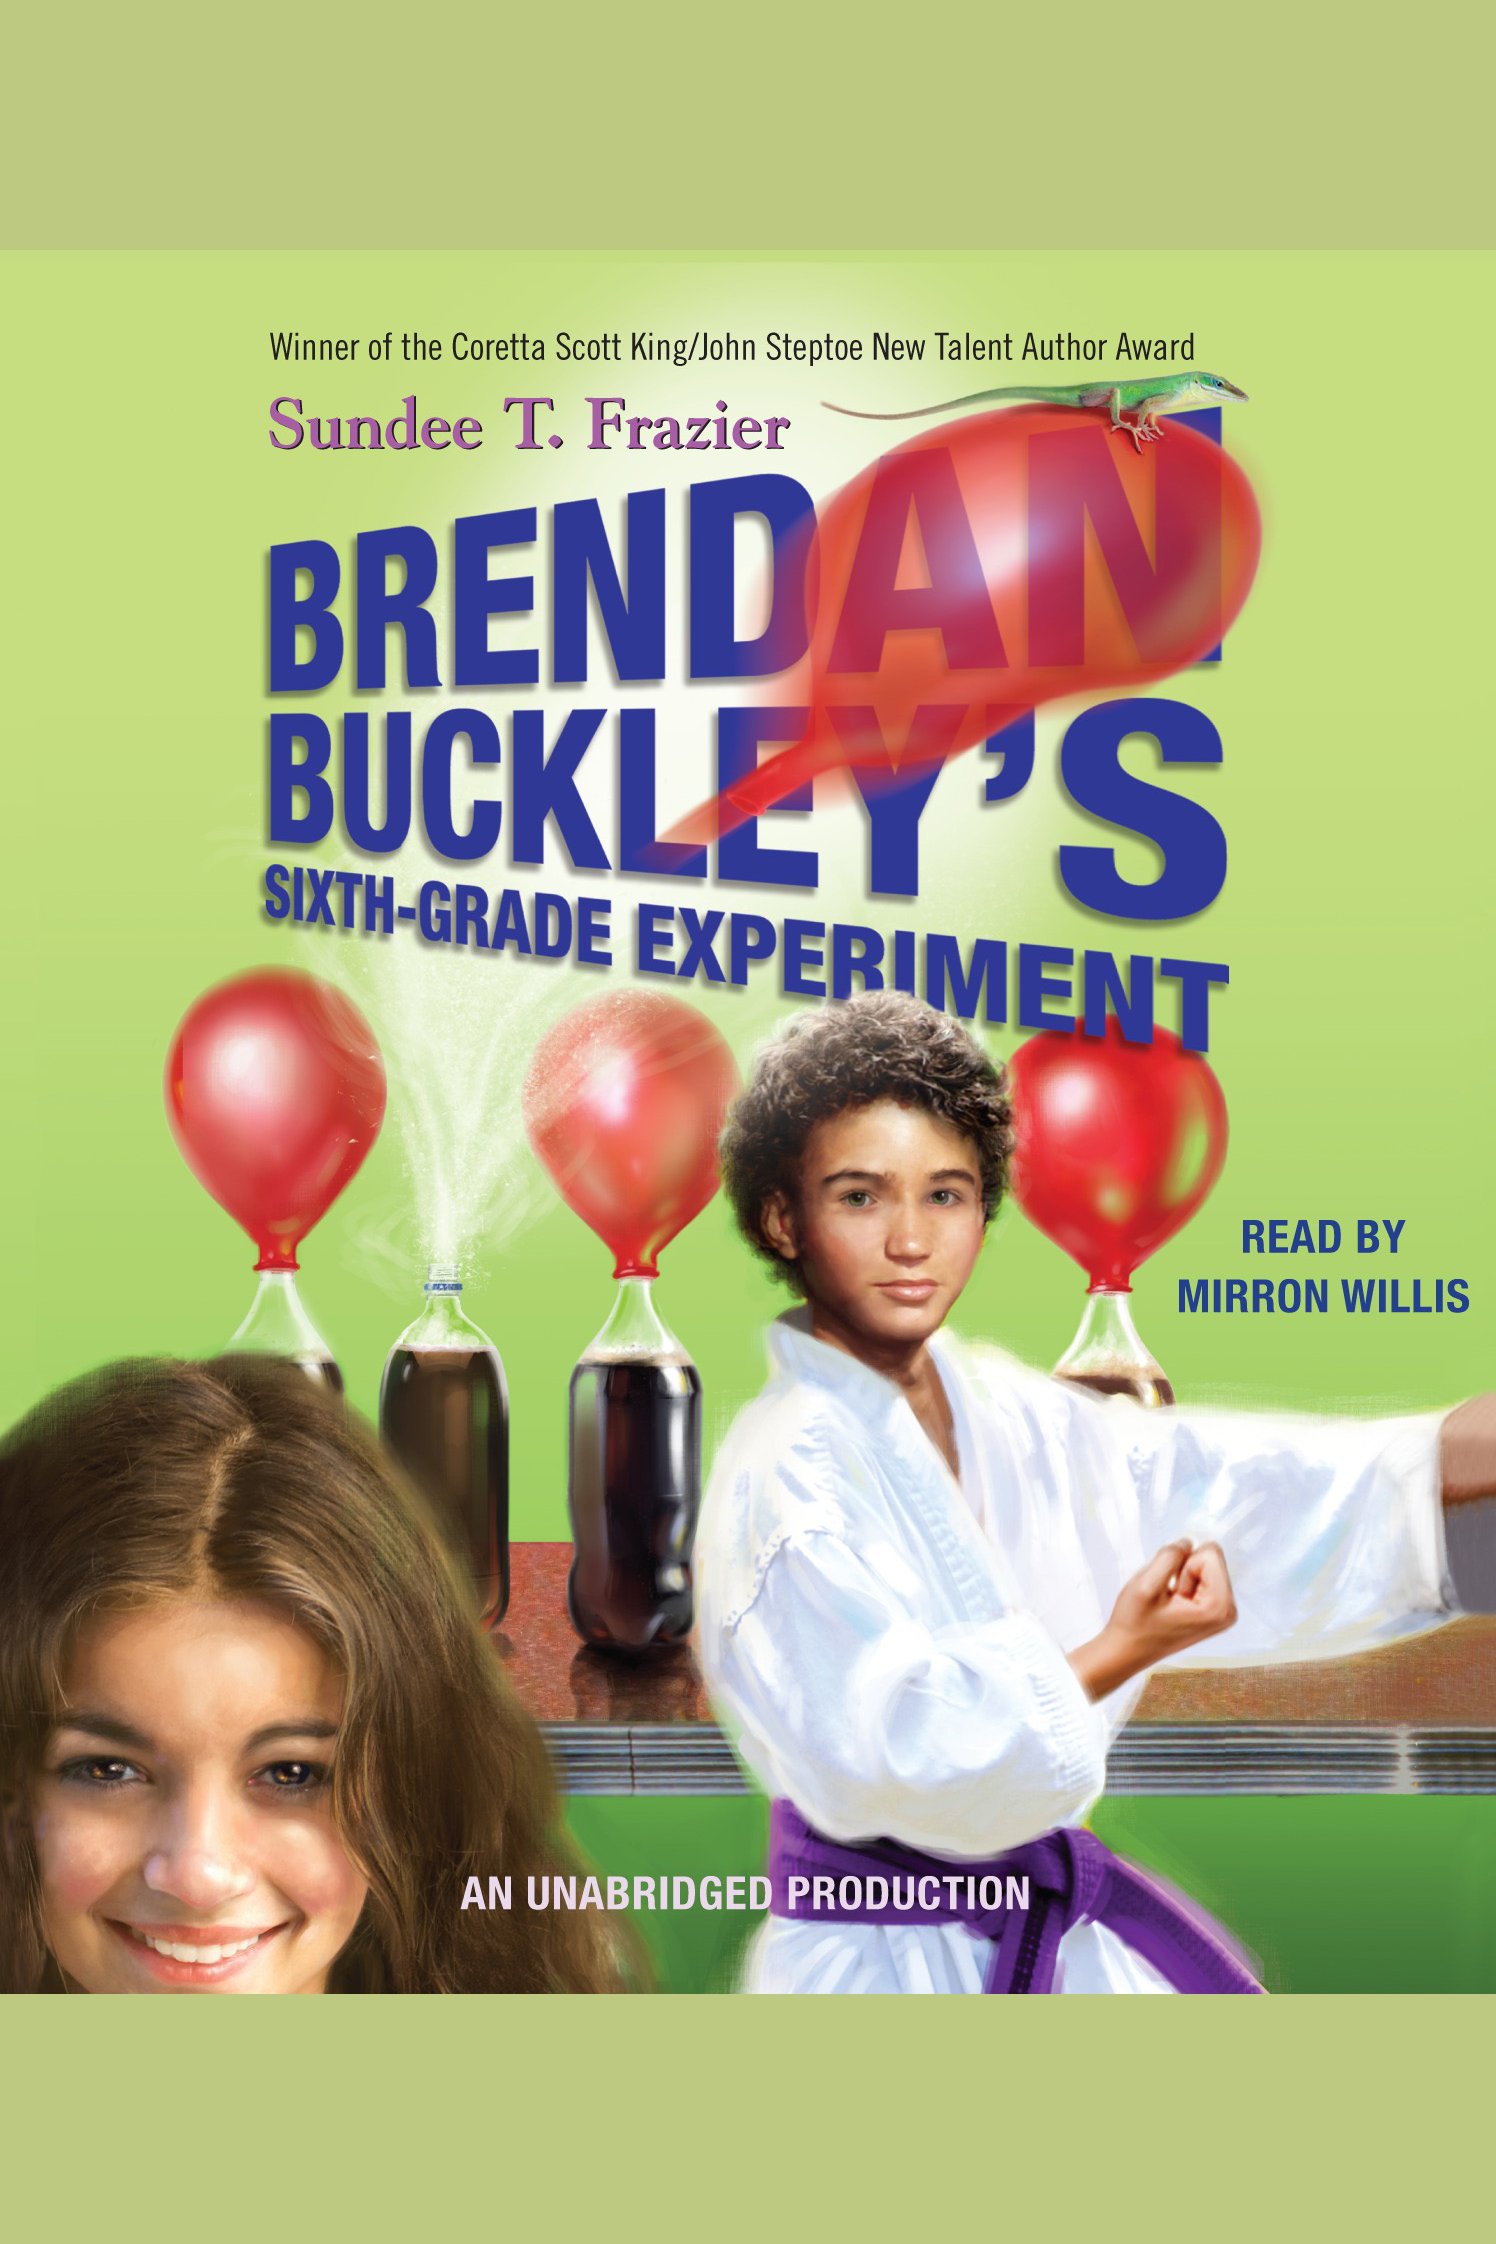 Brendan Buckley's sixth-grade experiment cover image